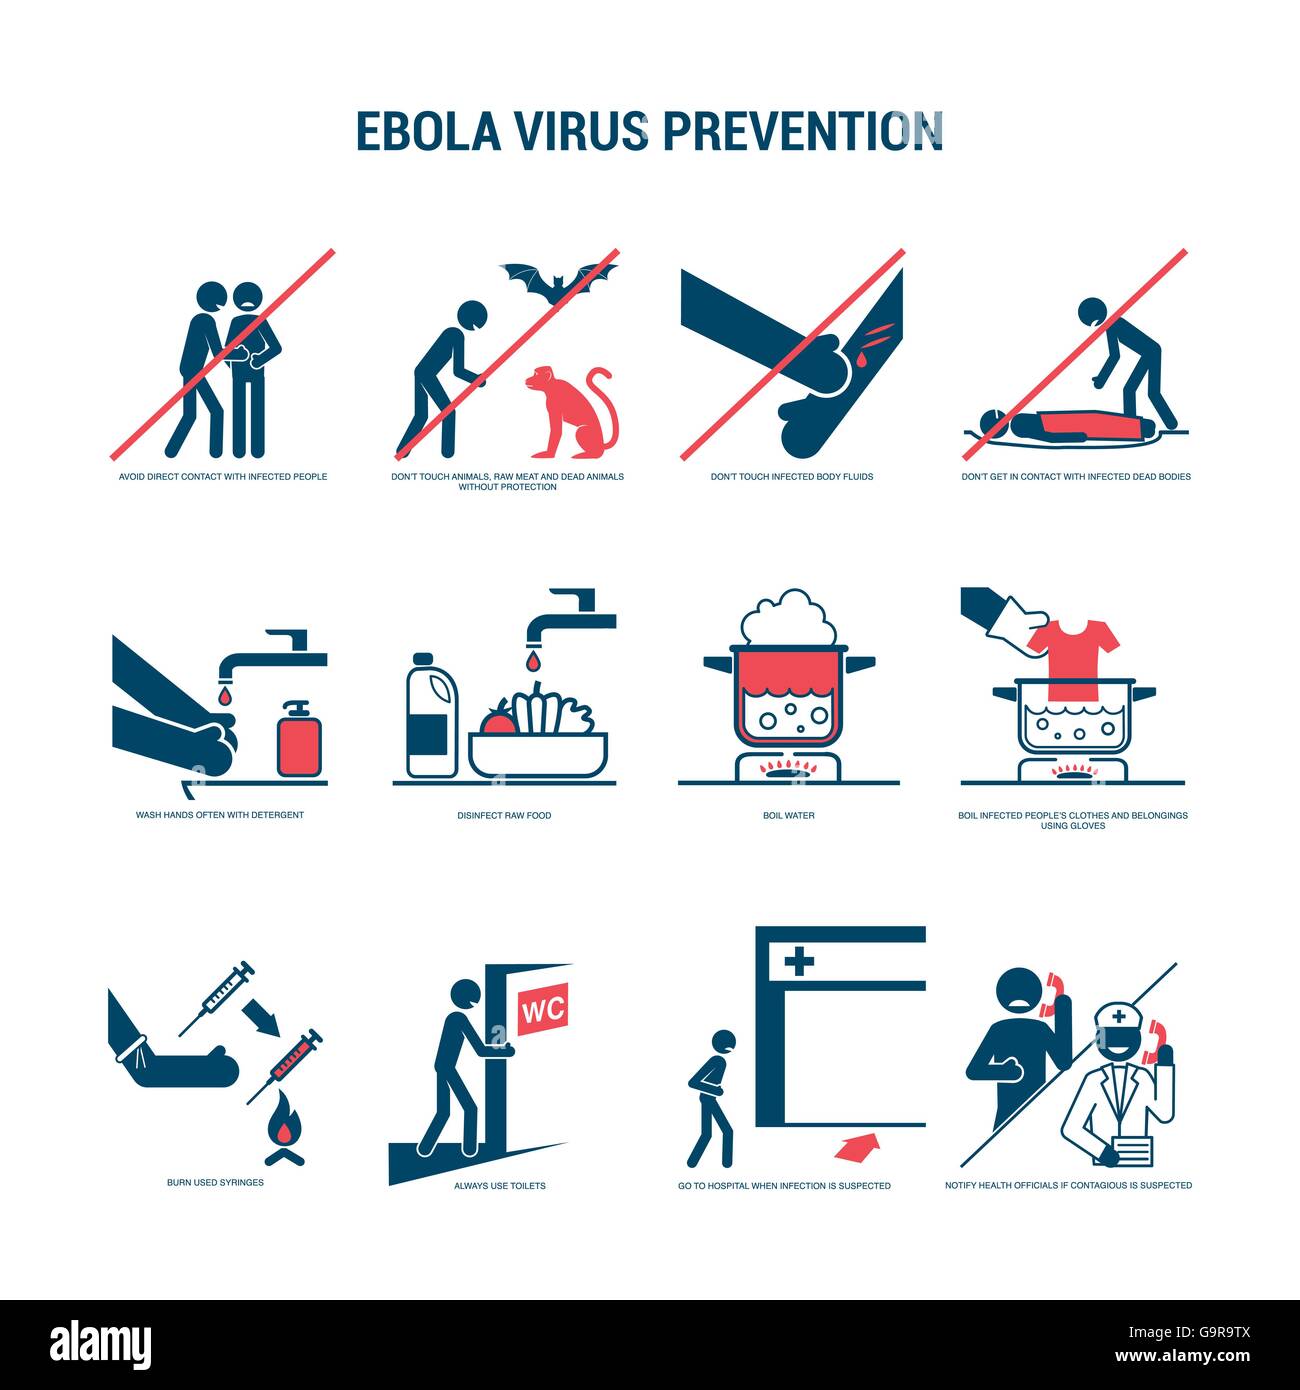 Ebola virus emergency prevention procedures with stick figures Stock Vector